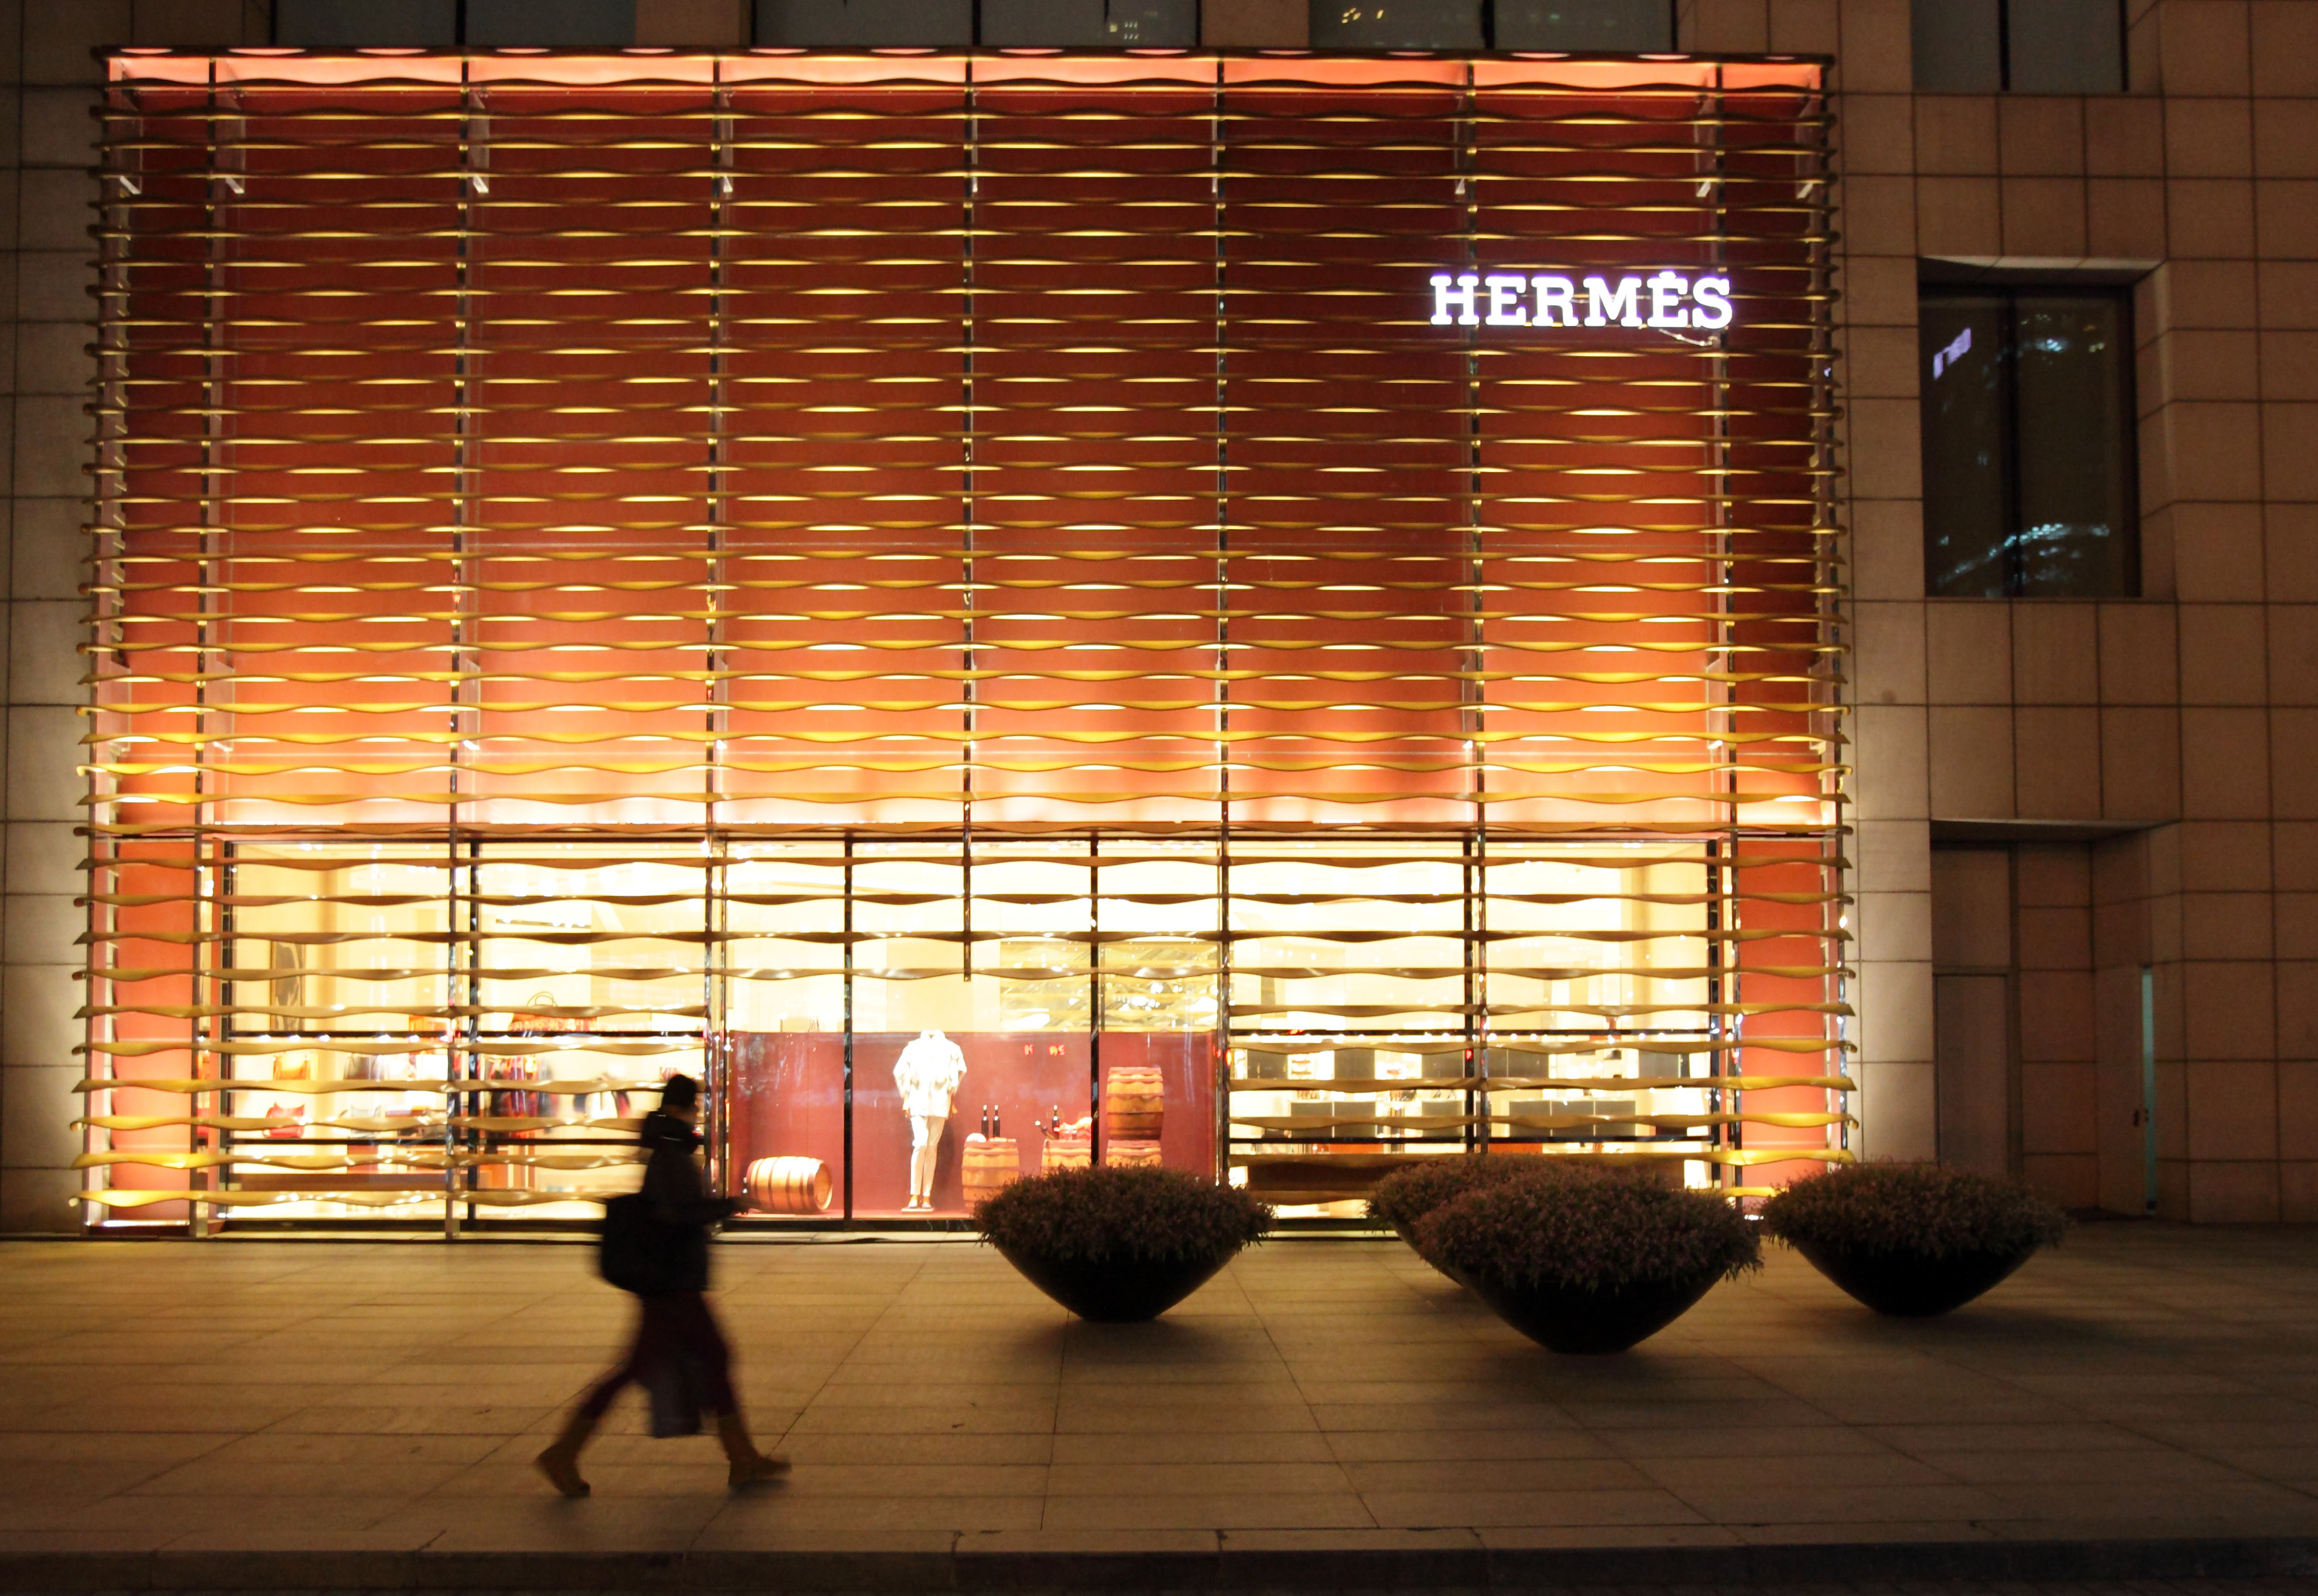 $10,000+ Bags Drive Record-Breaking Profits at Hermès